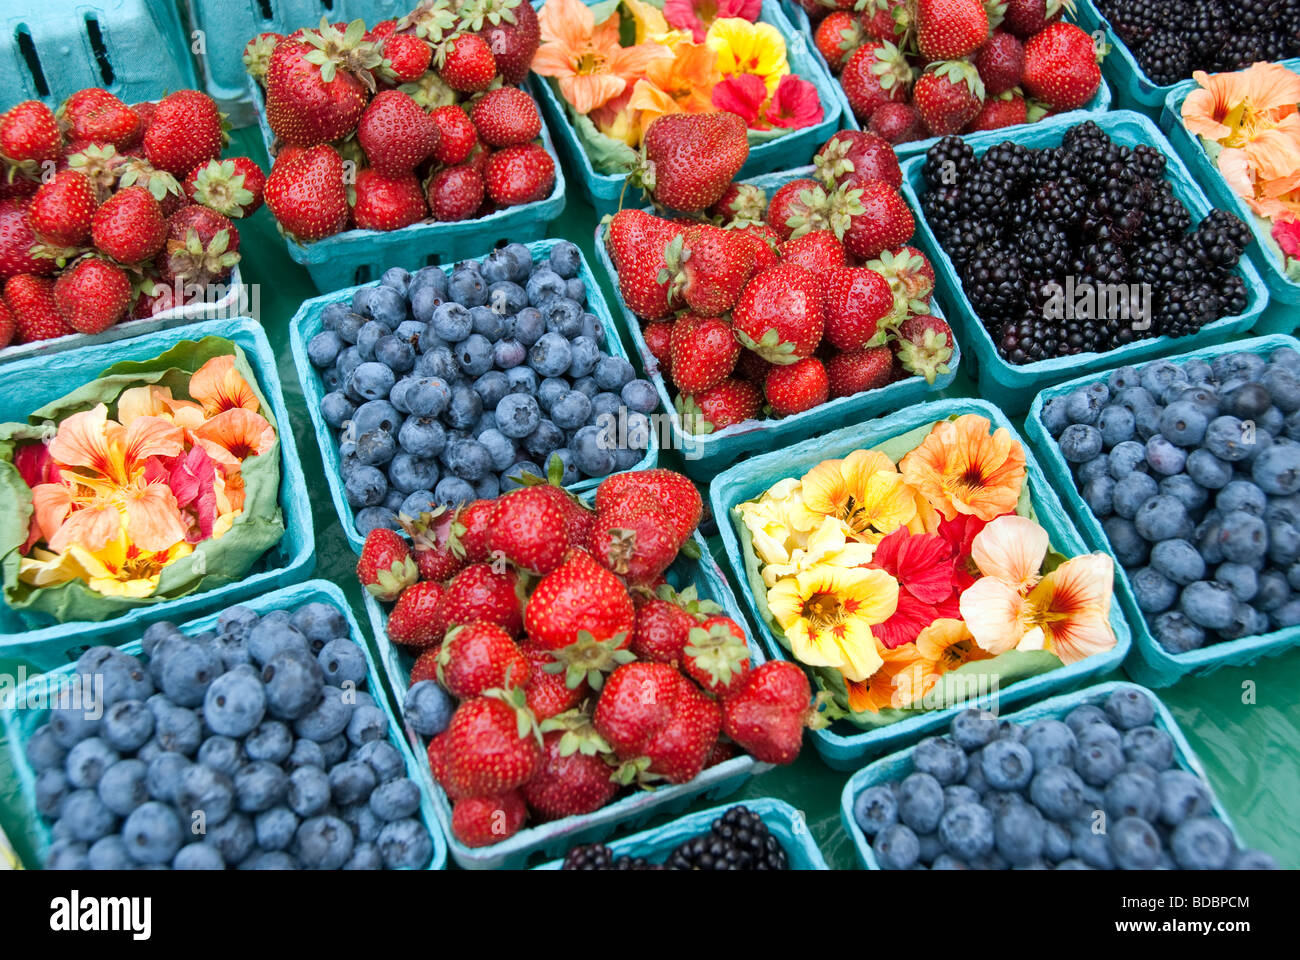 Kisten mit Heidelbeeren Brombeeren Erdbeeren & Kapuzinerkresse Blüten zum Verkauf auf grünen Bauernmarkt Bellingham WA Stockfoto